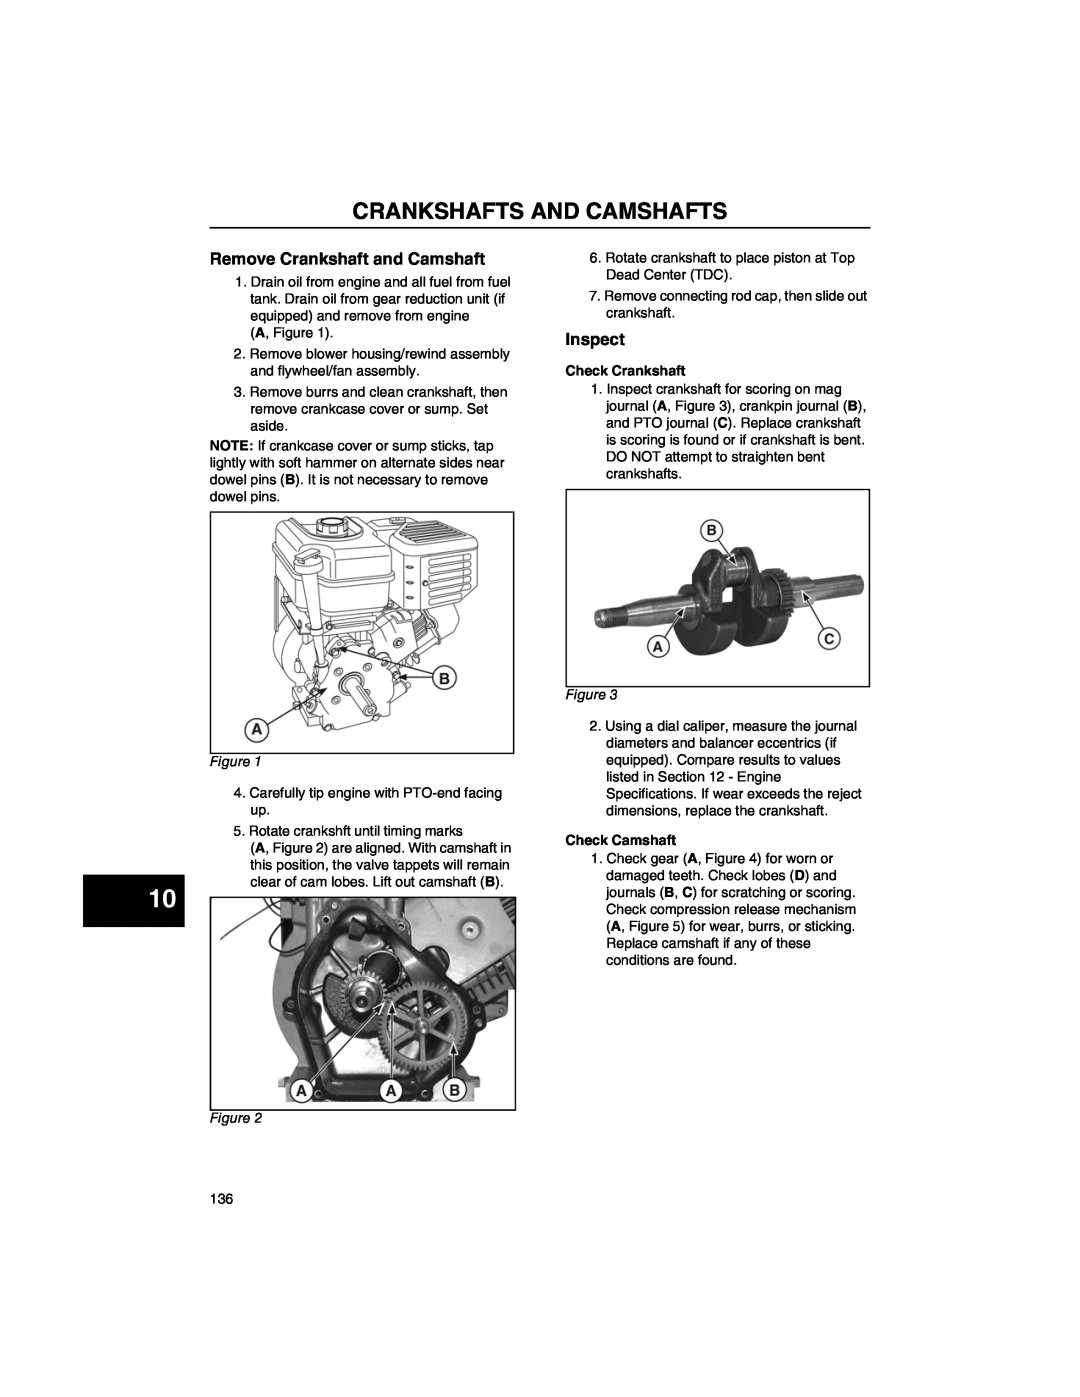 Briggs & Stratton 273521, 271172 manual Crankshafts And Camshafts, Remove Crankshaft and Camshaft, Inspect, Check Crankshaft 